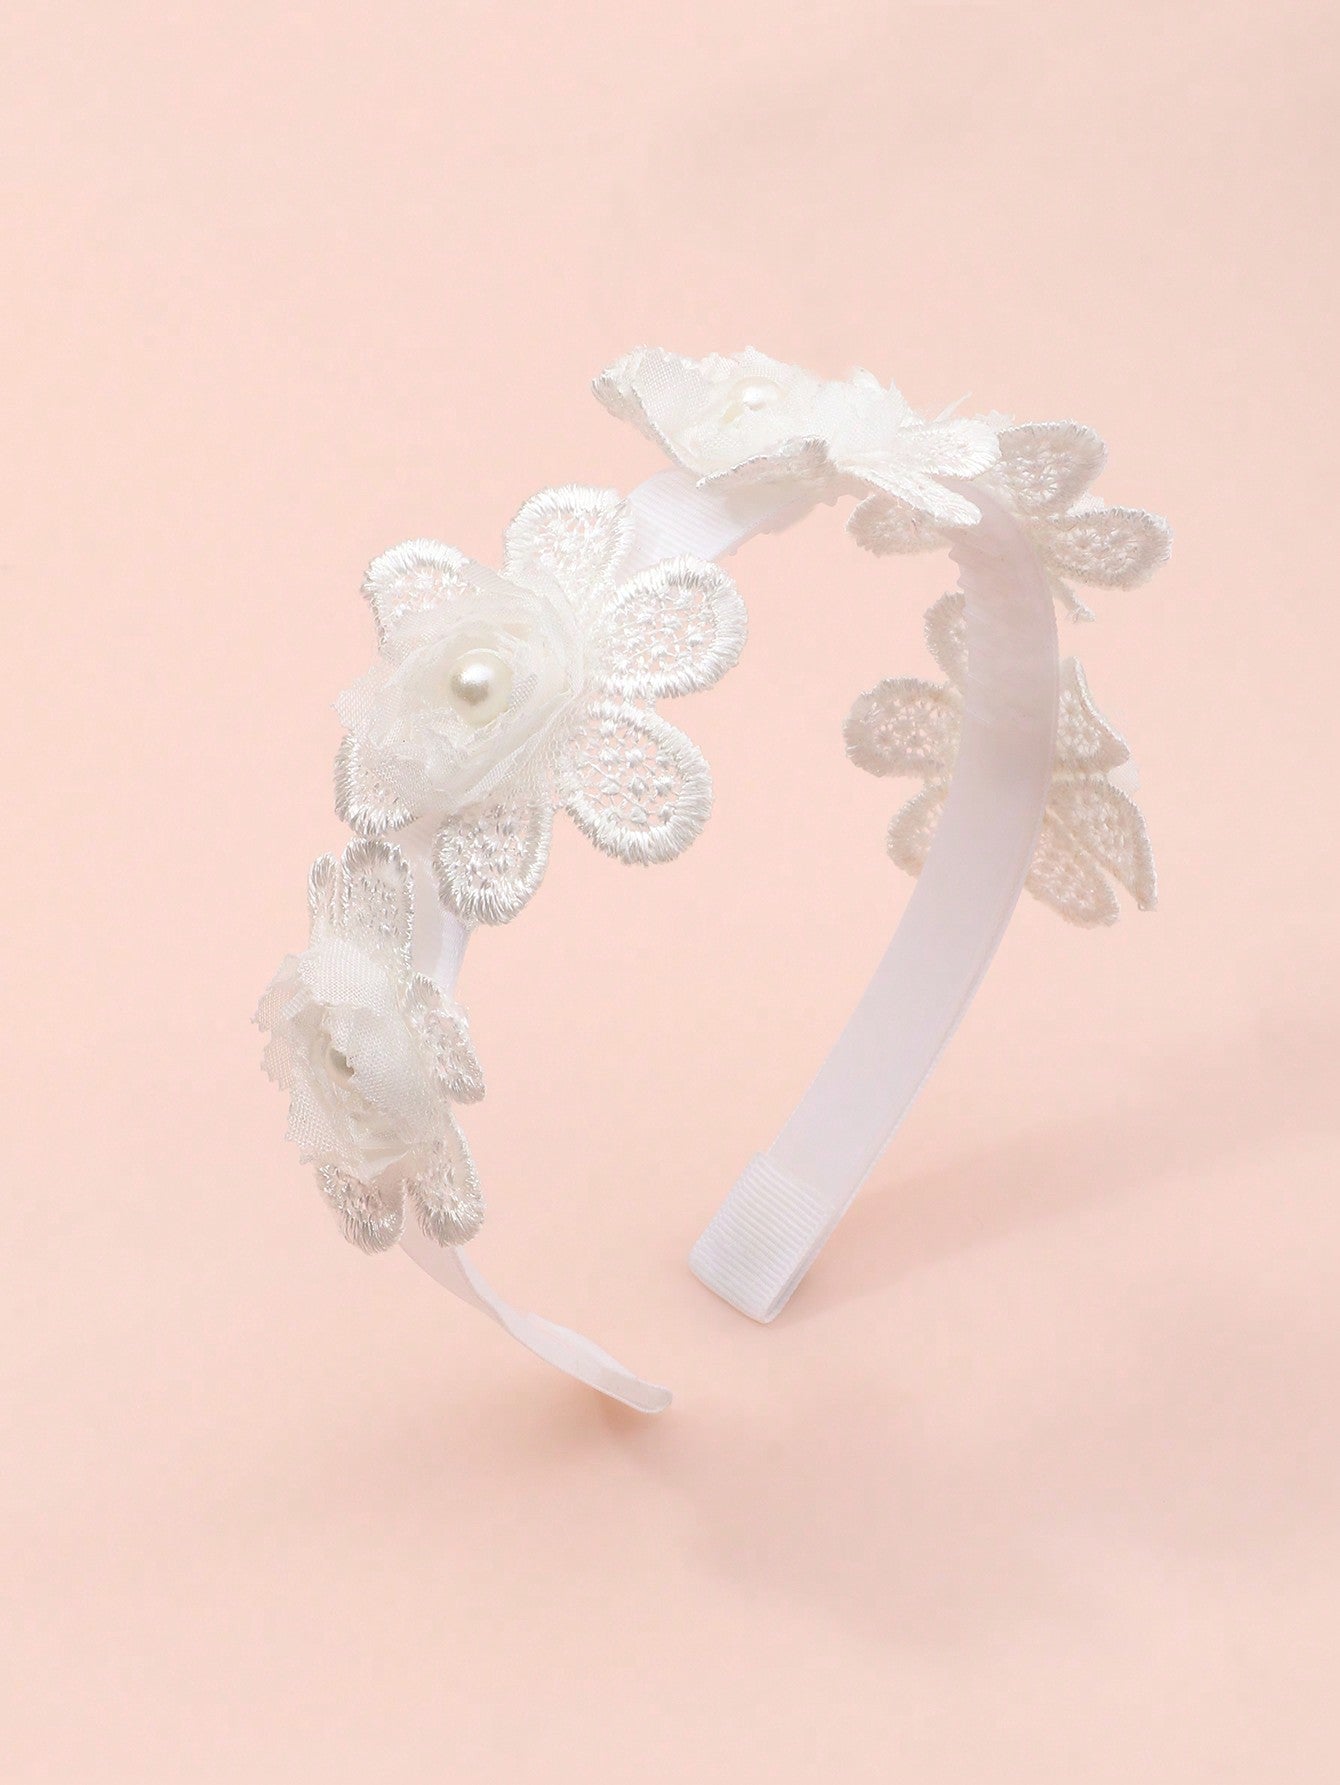 1pc Children's White Flower Headband